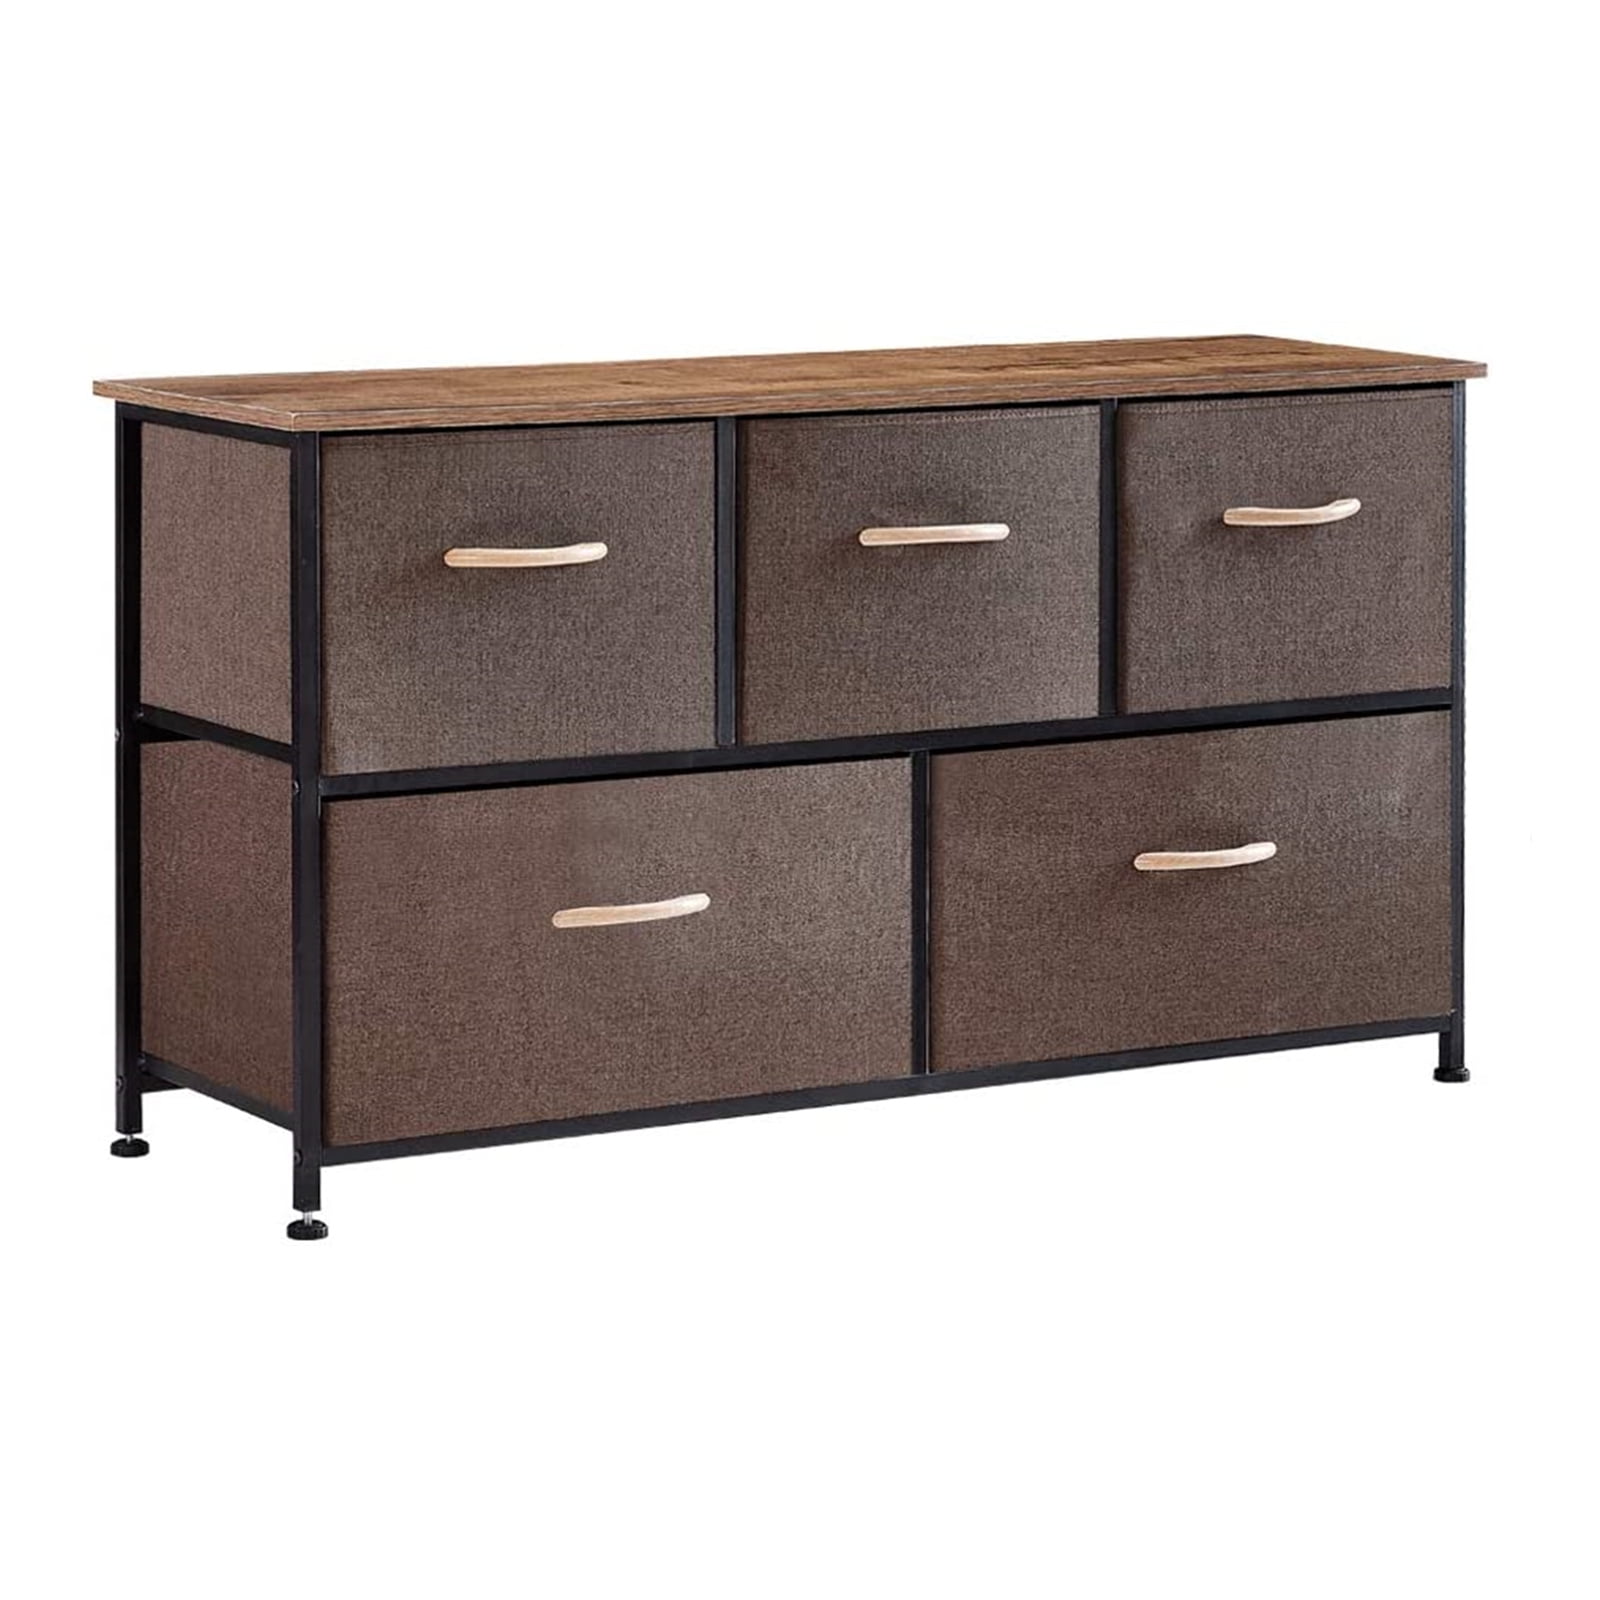 Details about   Bedroom Storage Dresser Tower Shelf Organizer Bins Cabinet w/ 3 Fabric Drawers 